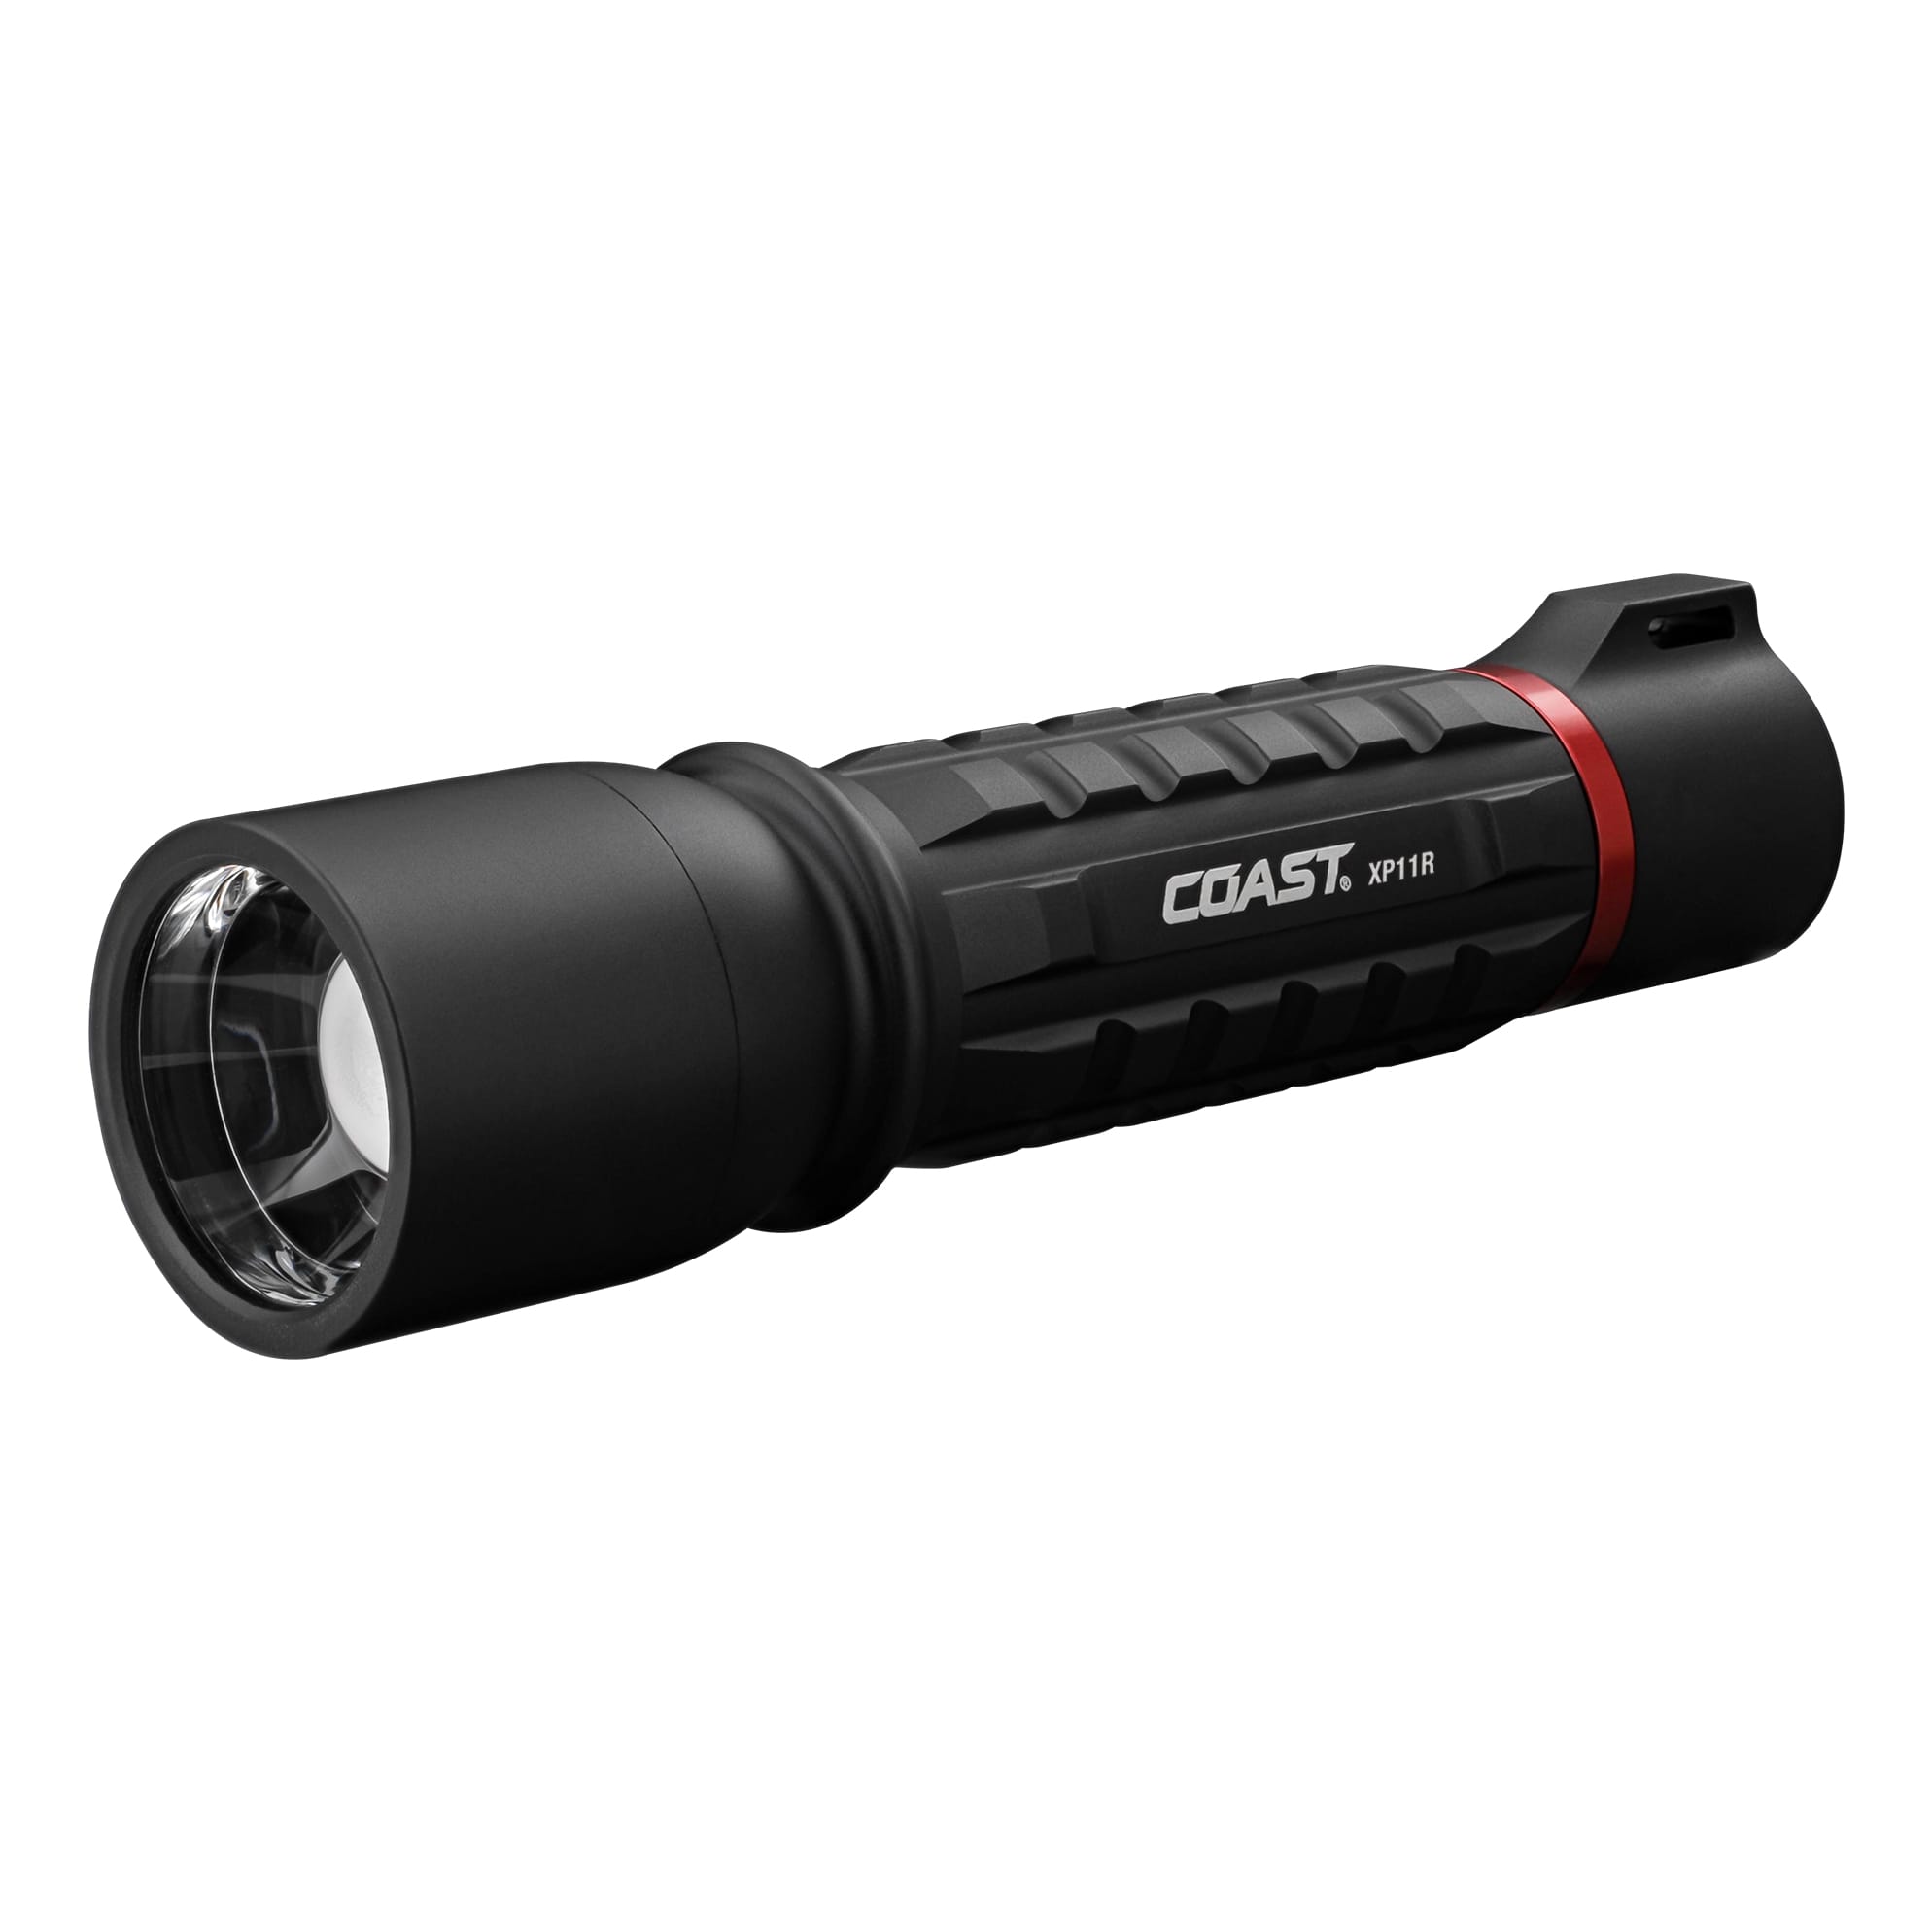 COAST® XP6R 2100 Lumen Rechargeable-Dual Power Flashlight